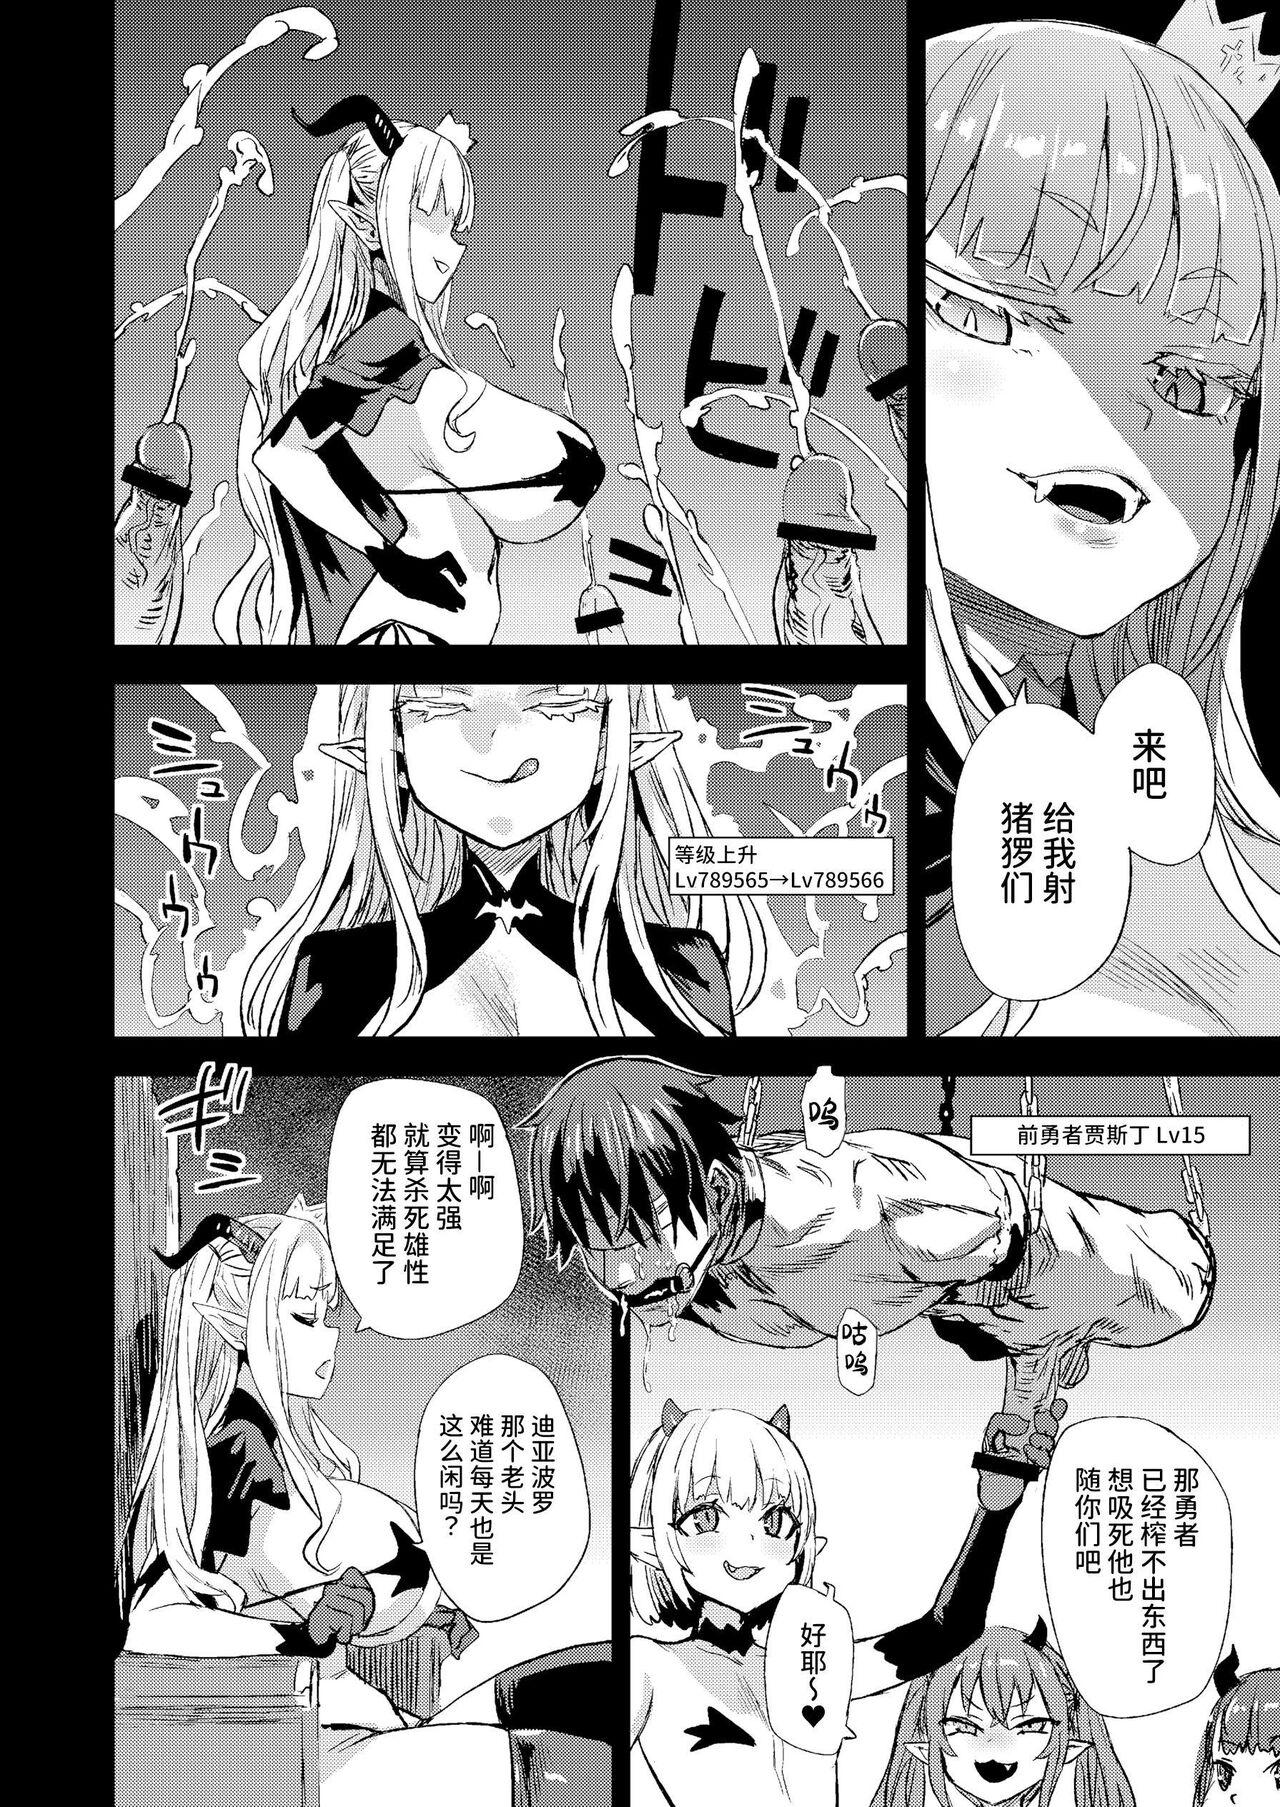 Solo Female Succubus Joou vs Zako Goblin - Original Hardsex - Page 6